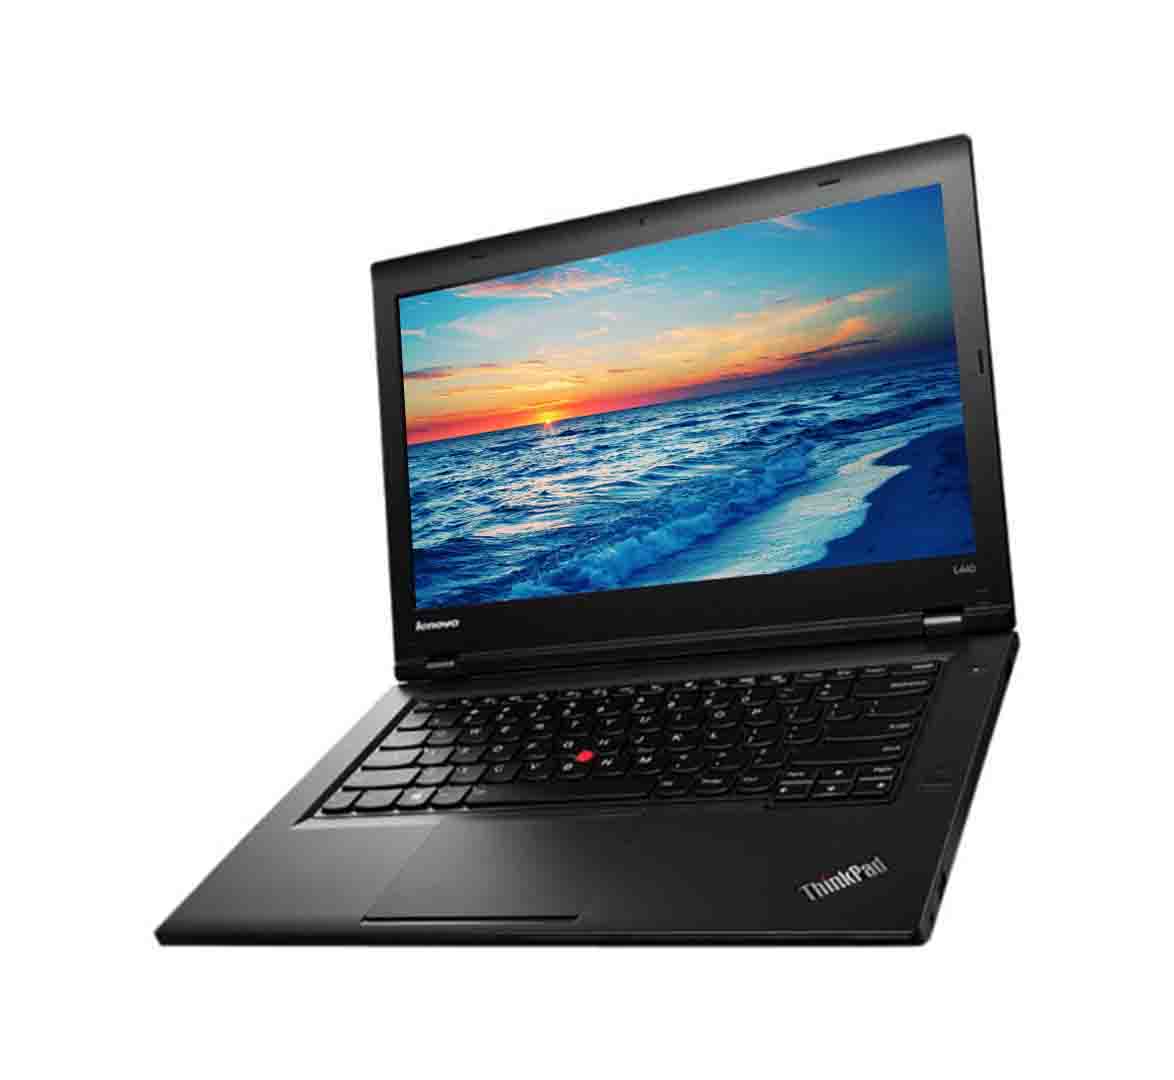 Lenovo Thinkpad L440 Business Laptop, Intel Core i5-4th Generation CPU, 8GB RAM, 256GB SSD, 14 inch Display, Windows 10 Pro, Refurbished Laptop